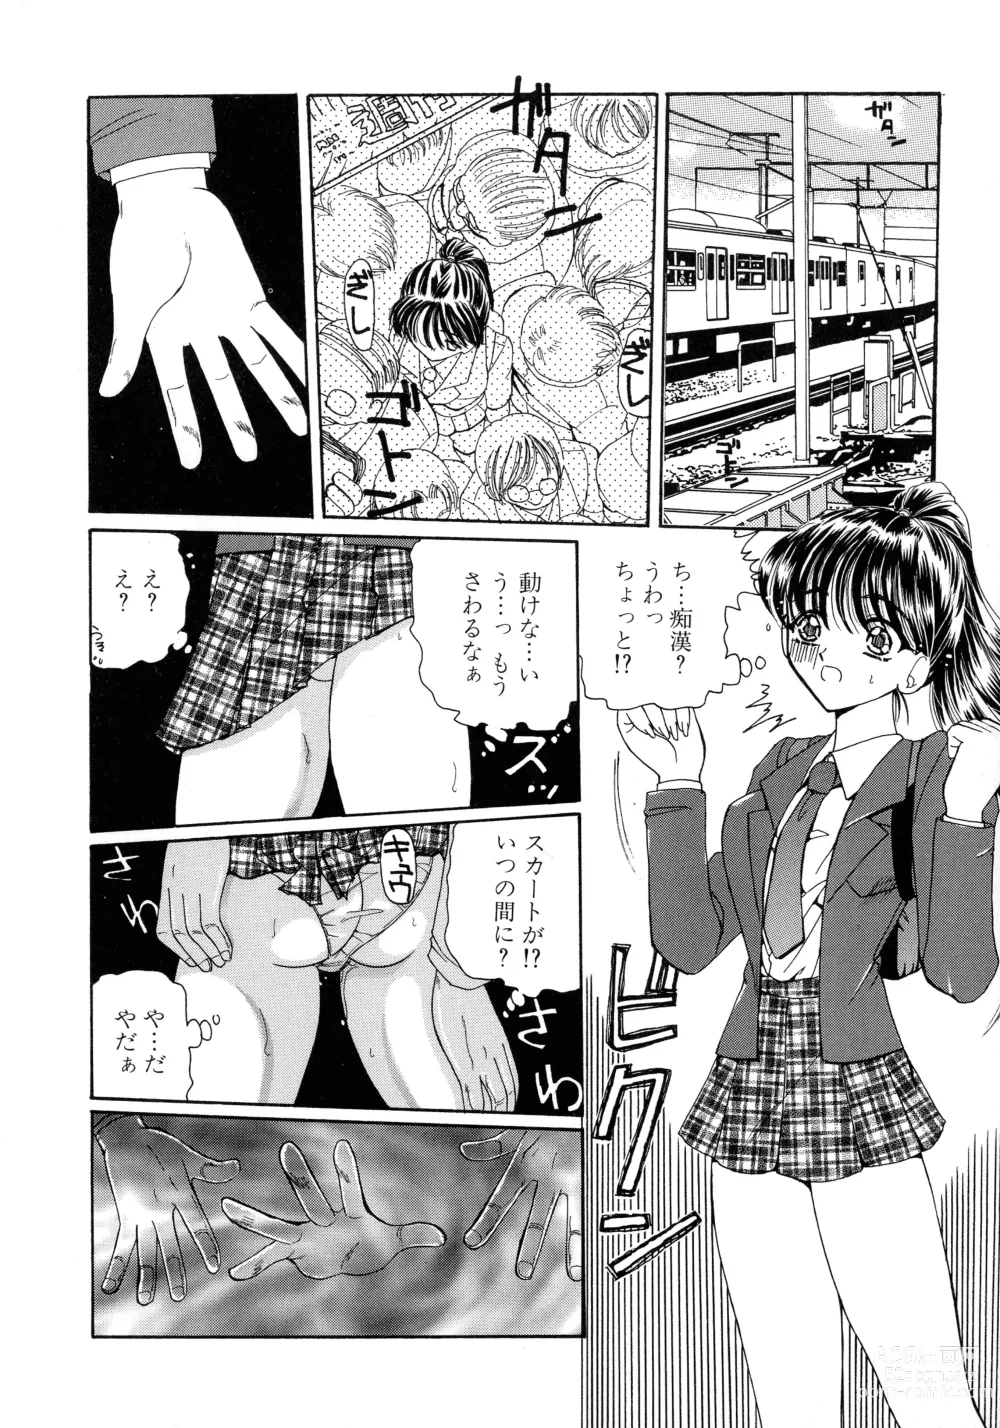 Page 146 of manga Mahou Trouble